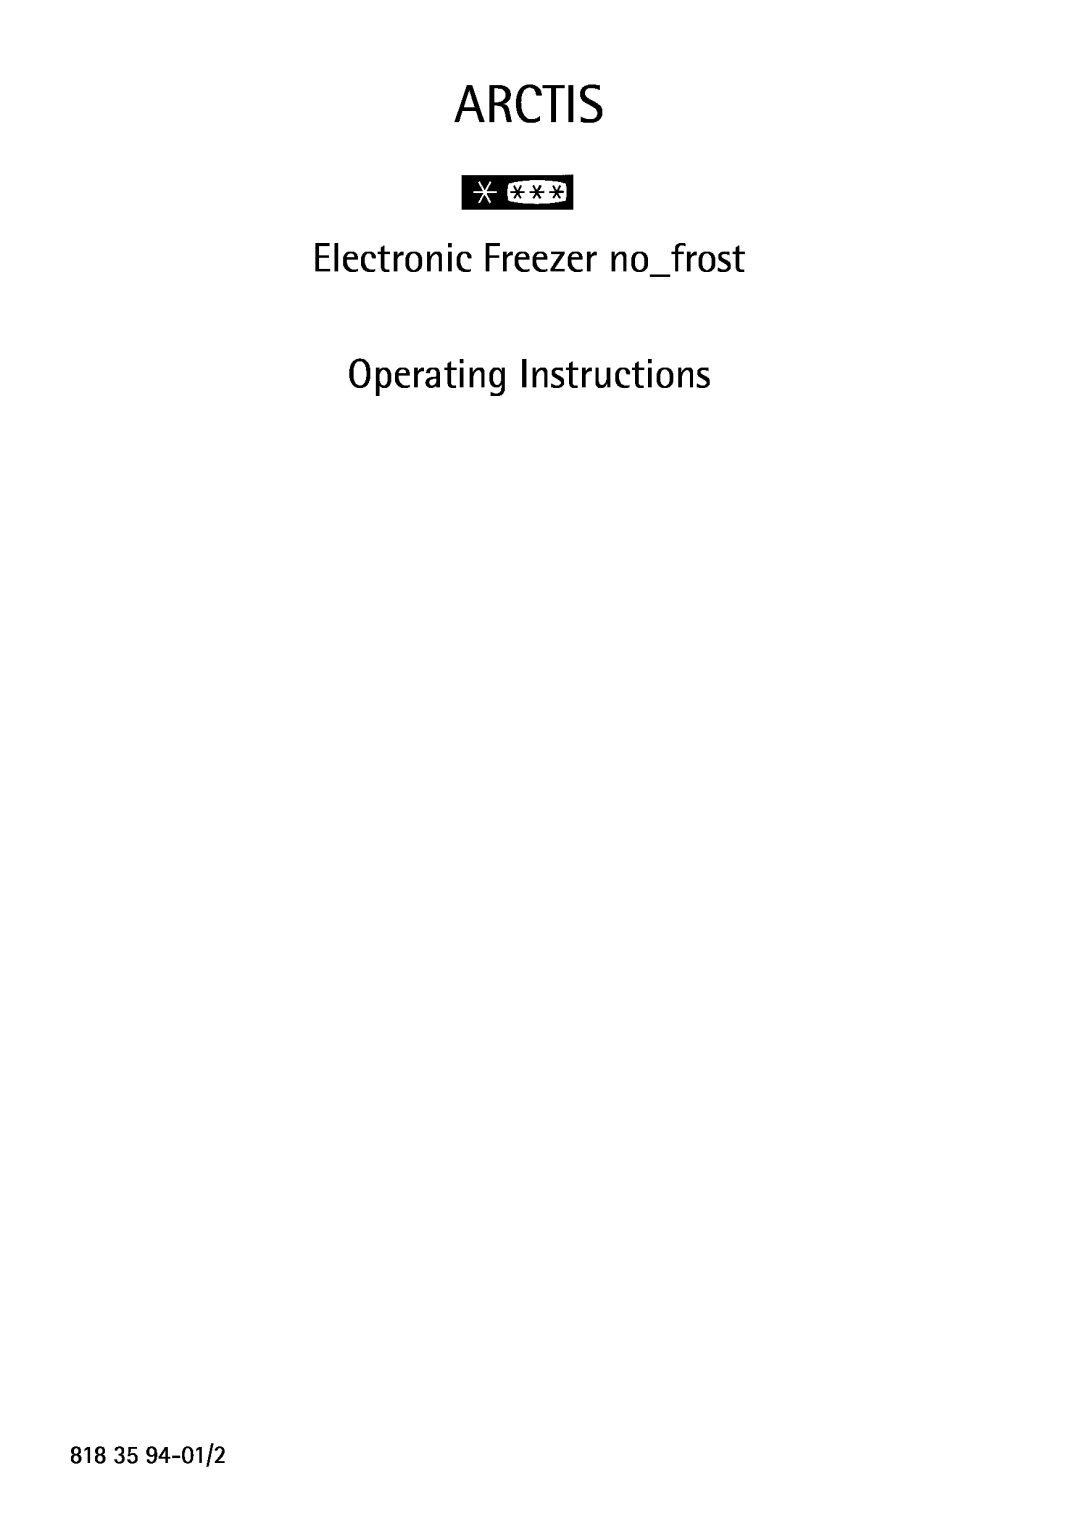 Electrolux U31462 operating instructions Arctis, Electronic Freezer nofrost Operating Instructions 